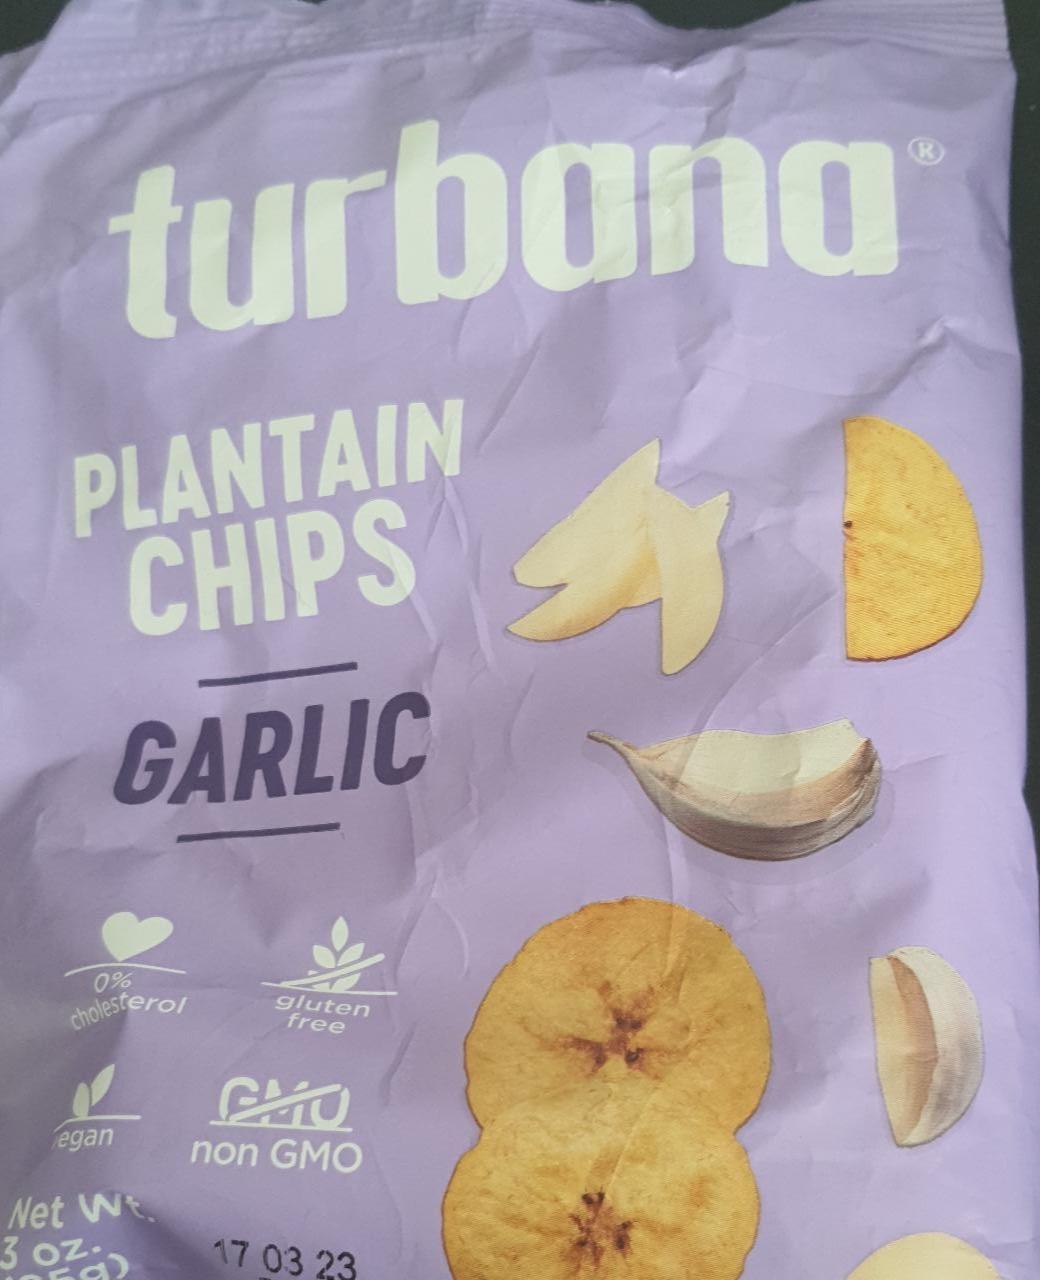 Zdjęcia - Plantain chips garlic Turbana